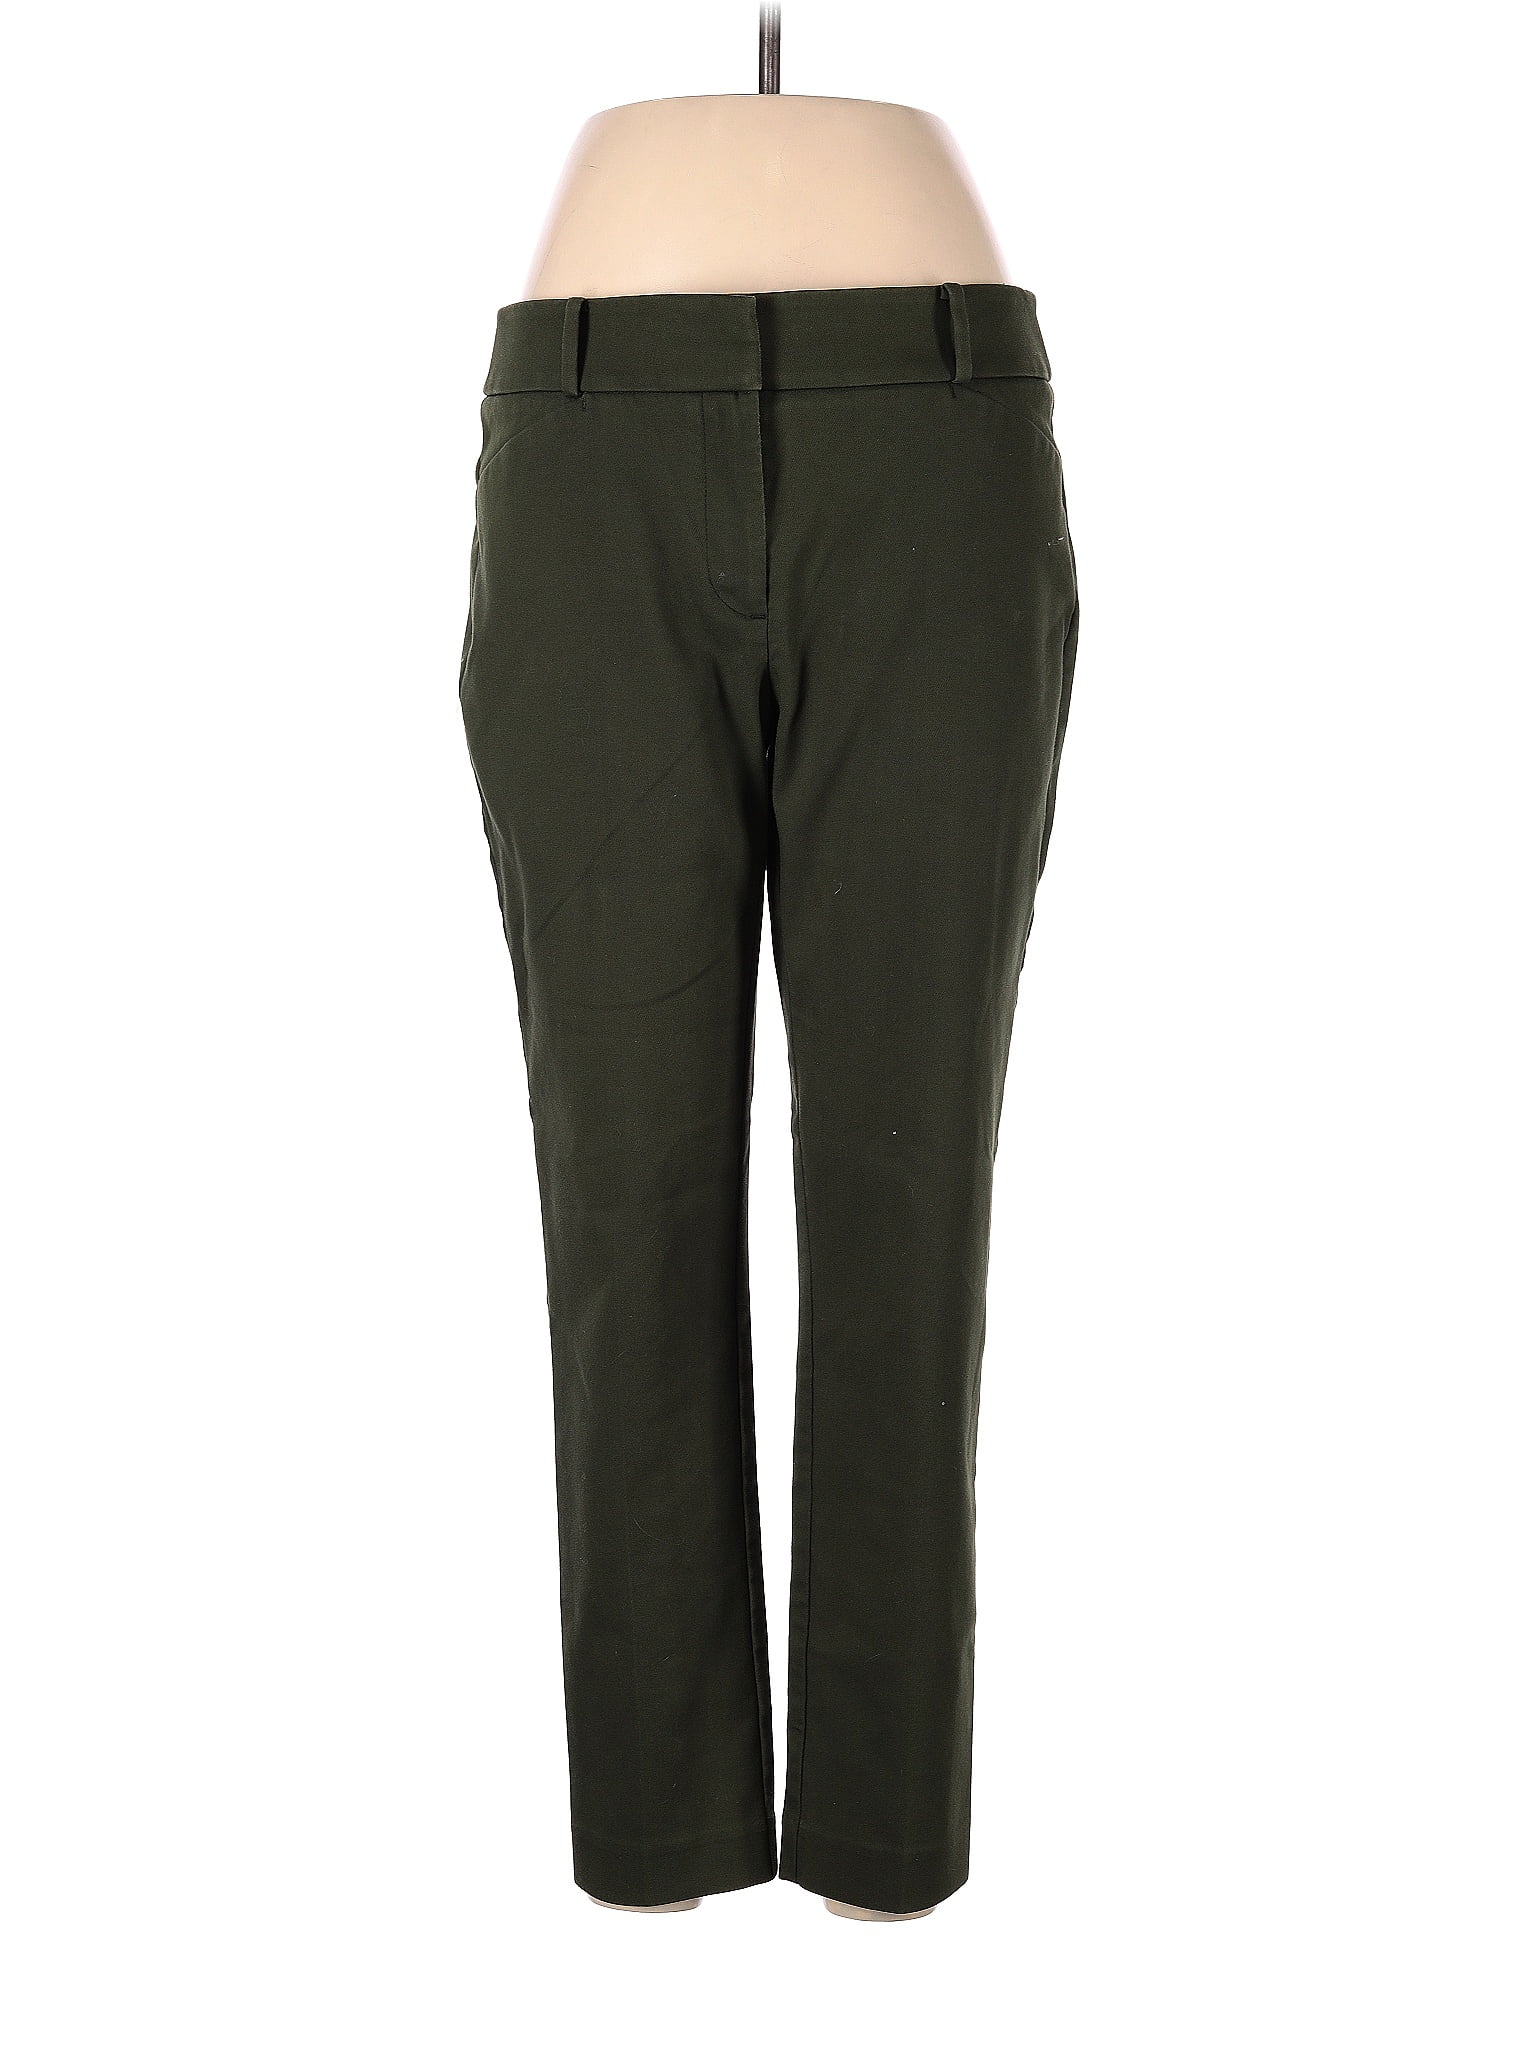 Ann Taylor LOFT Solid Green Dress Pants Size 6 - 78% off | thredUP